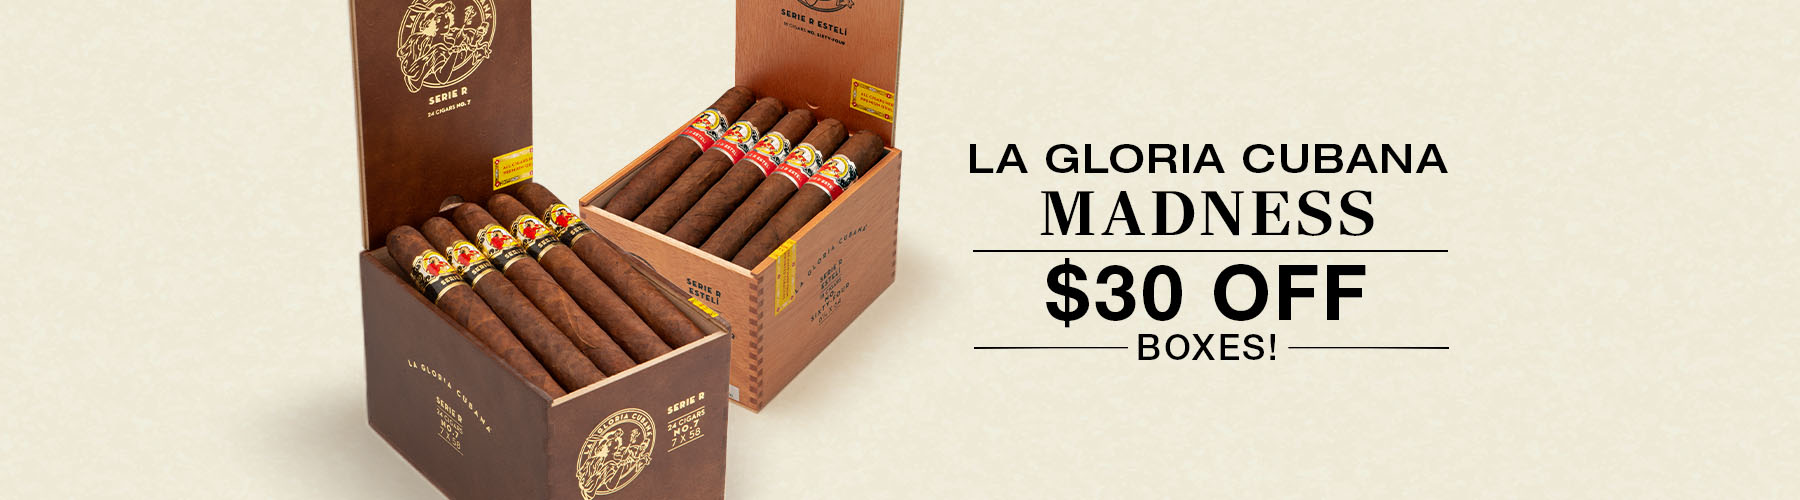 La Gloria Cubana Madness $30.00 off!